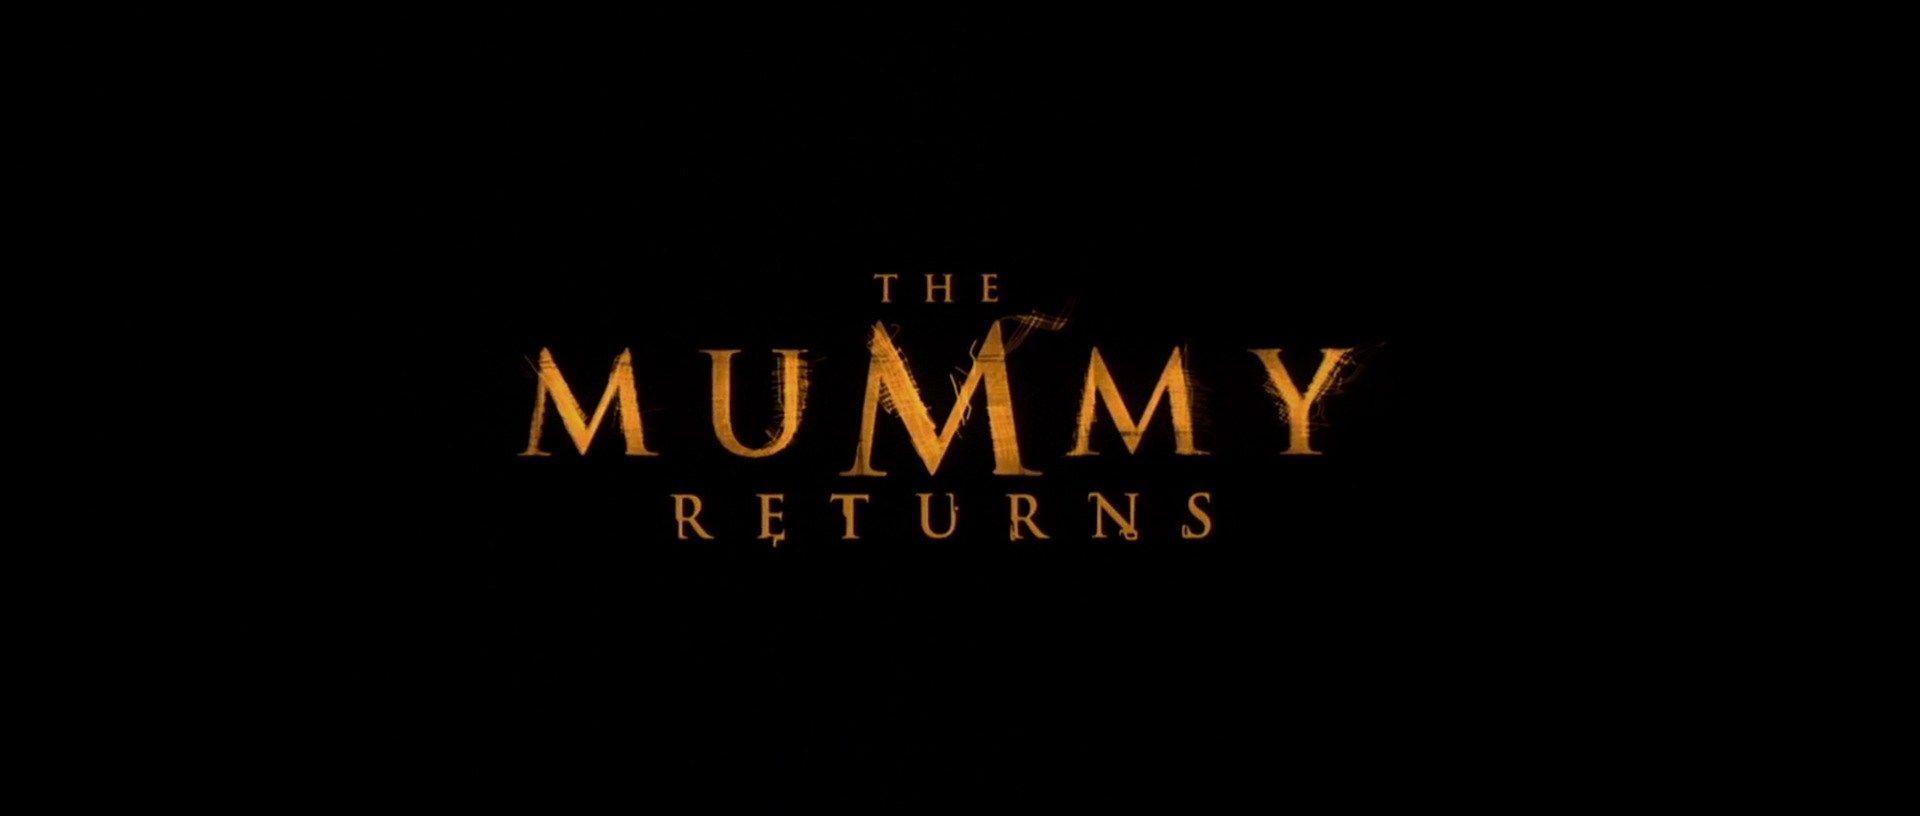 Mummy Movie Logo - Image - The Mummy Returns Logo.jpg | Film and Television Wikia ...